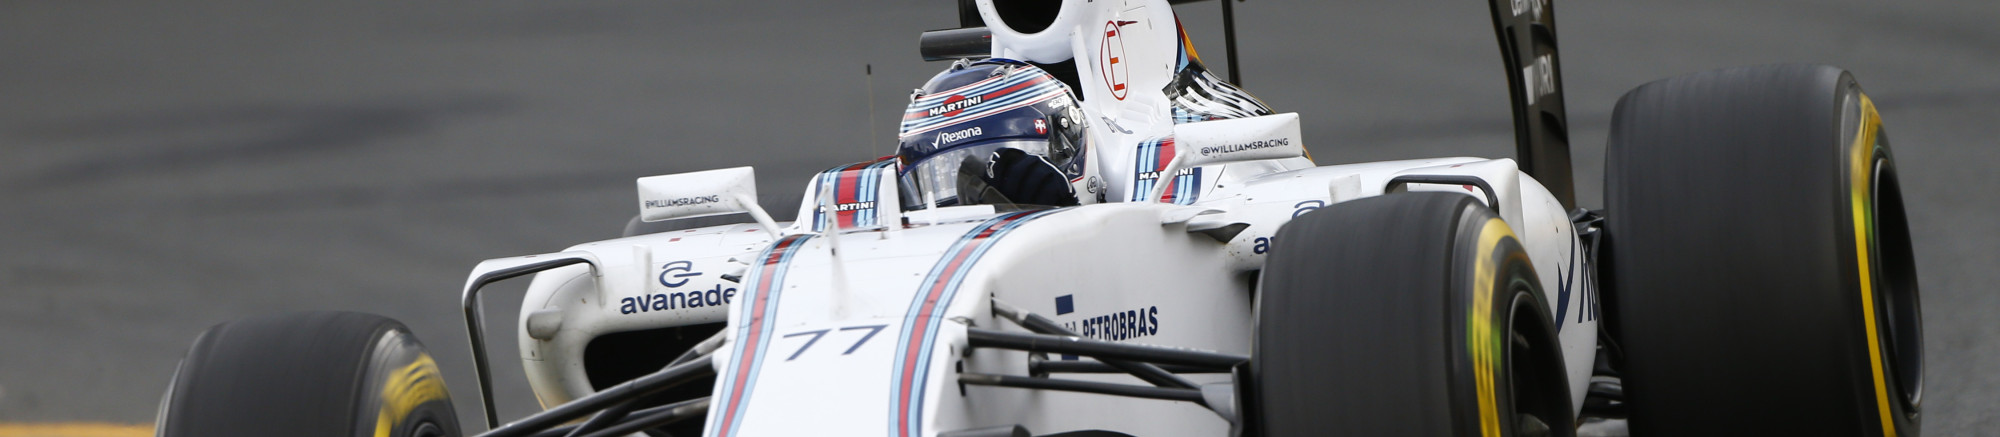 BOTTAS valtteri, williams f1 mercedes fw37, 2015 Formula 1 Australian Grand Prix, 